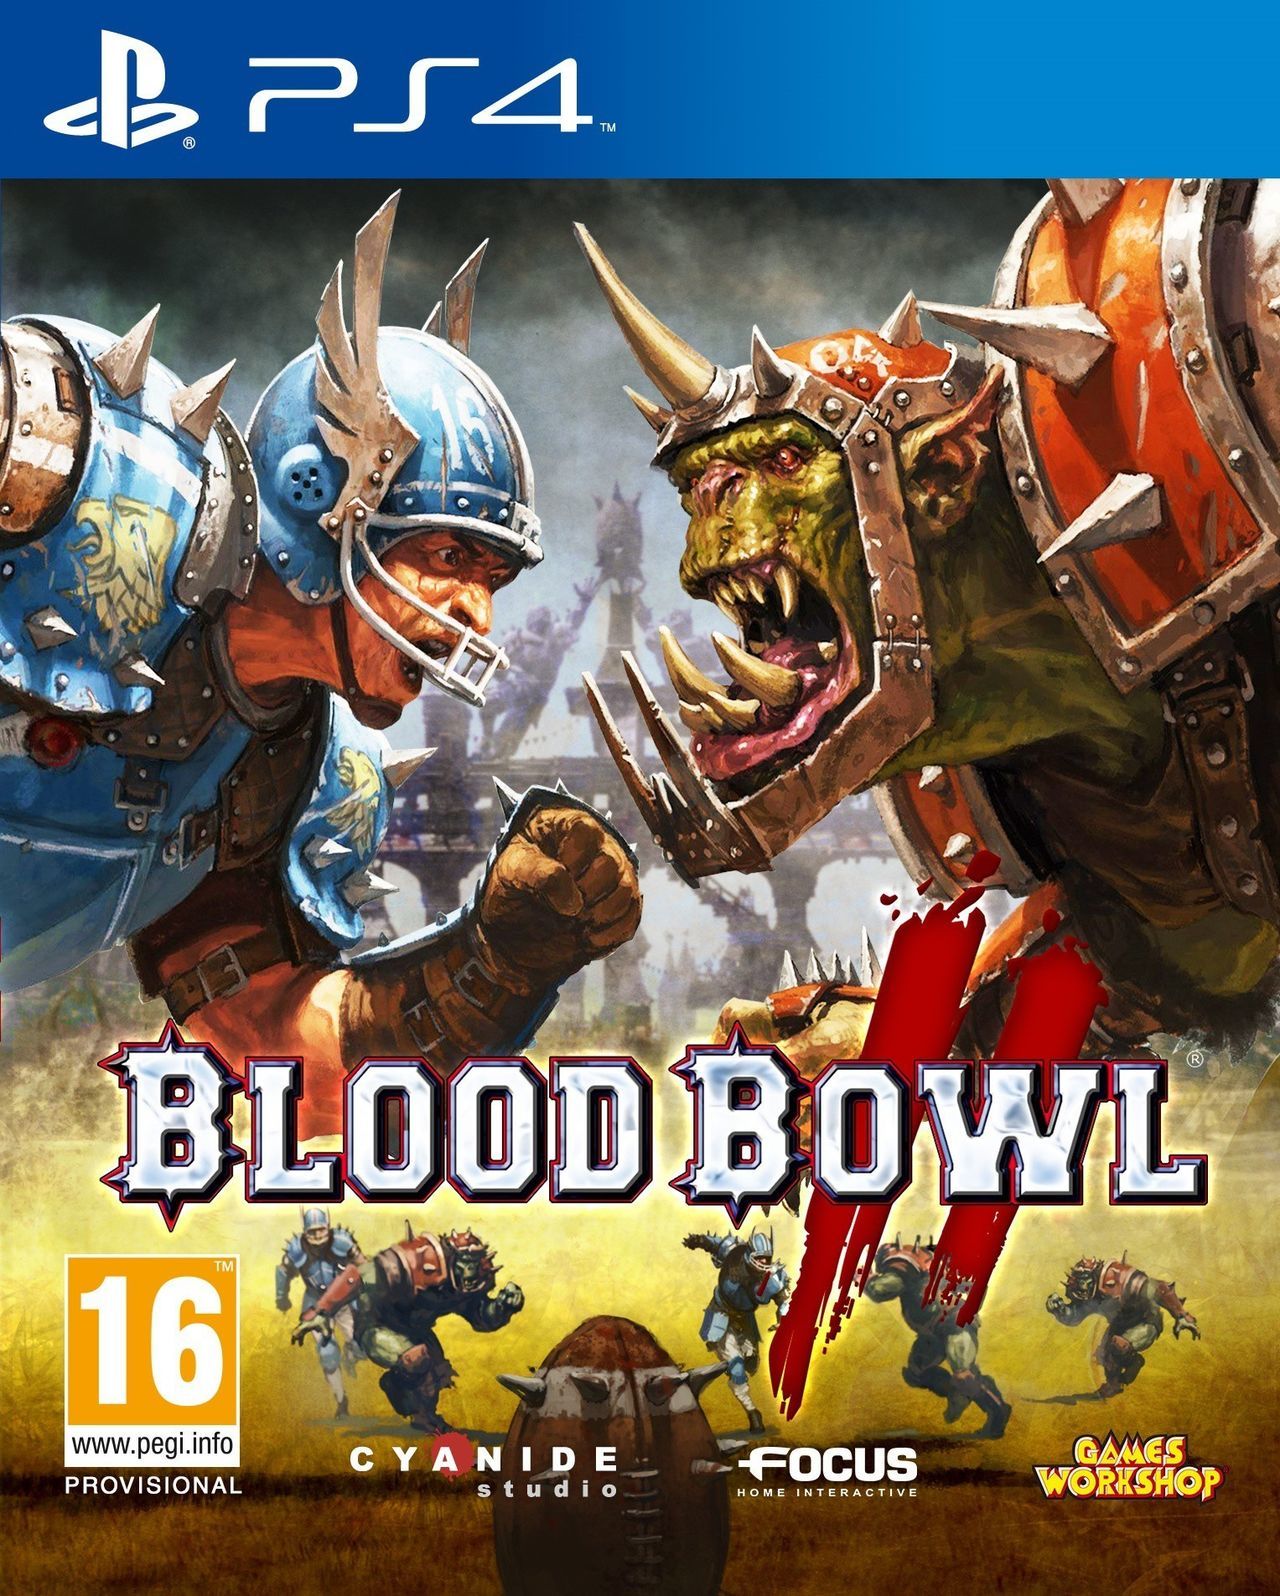 download blood bowl 3 xbox